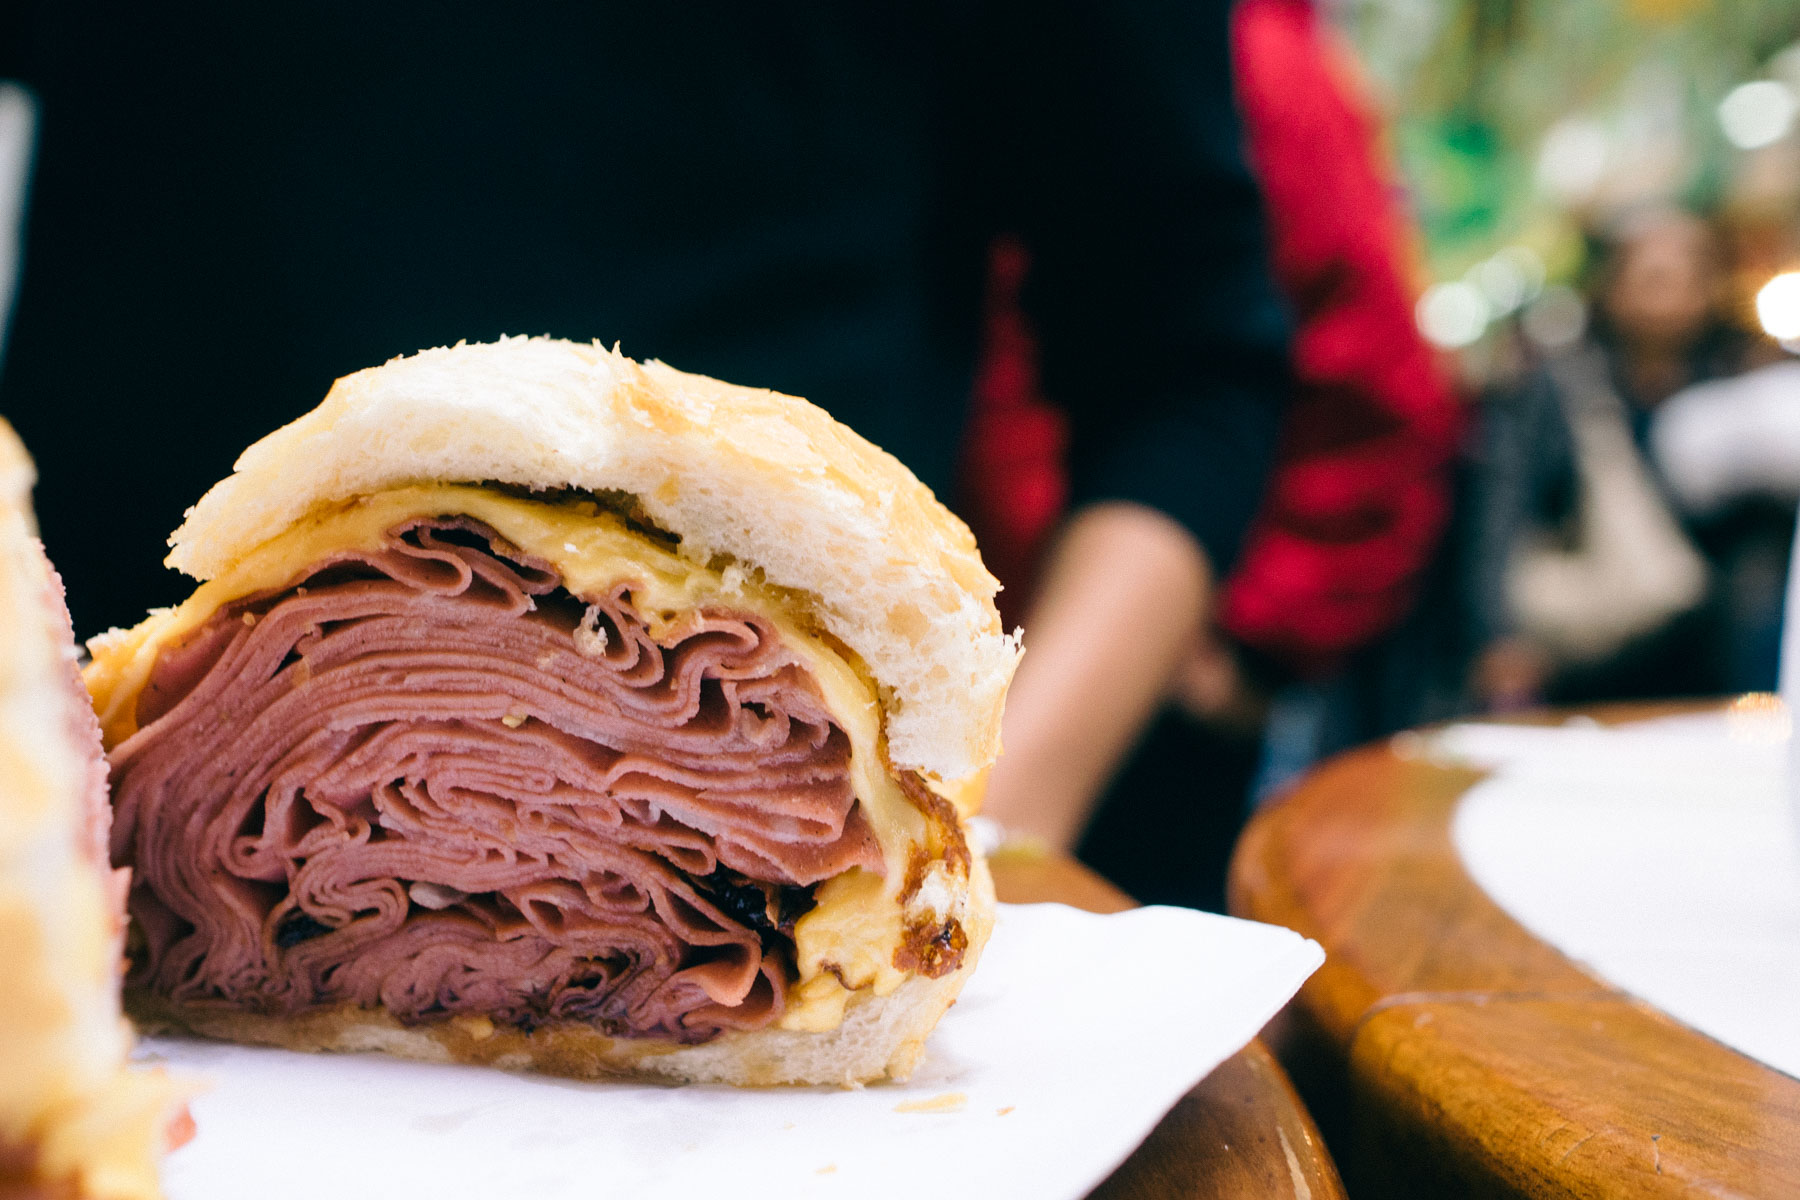 Bar do Mané Review: Best Mortadella Sandwich in Sao Paulo, Brazil